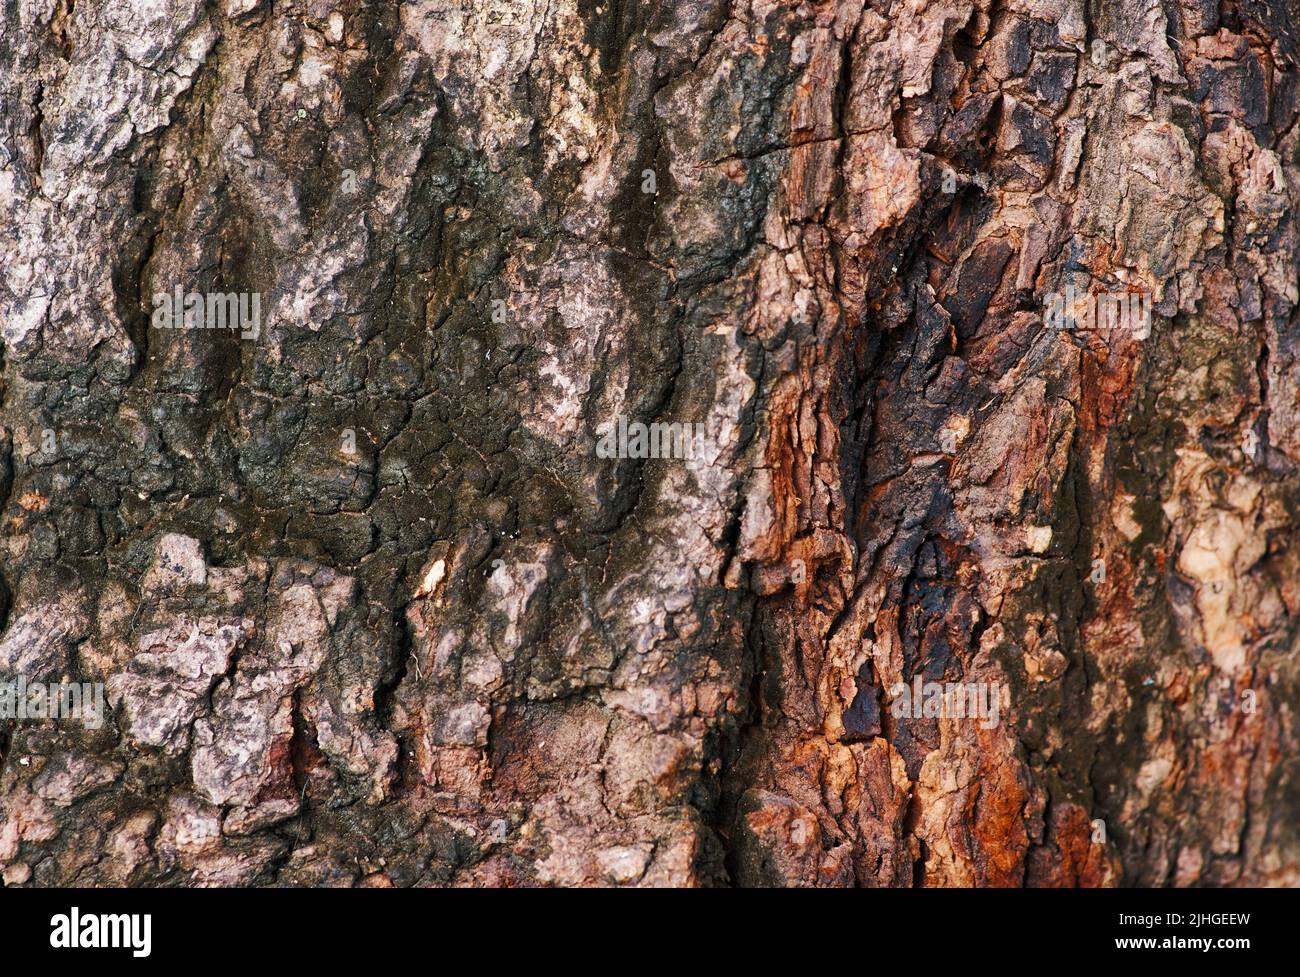 La textura áspera de la corteza del árbol Foto de stock